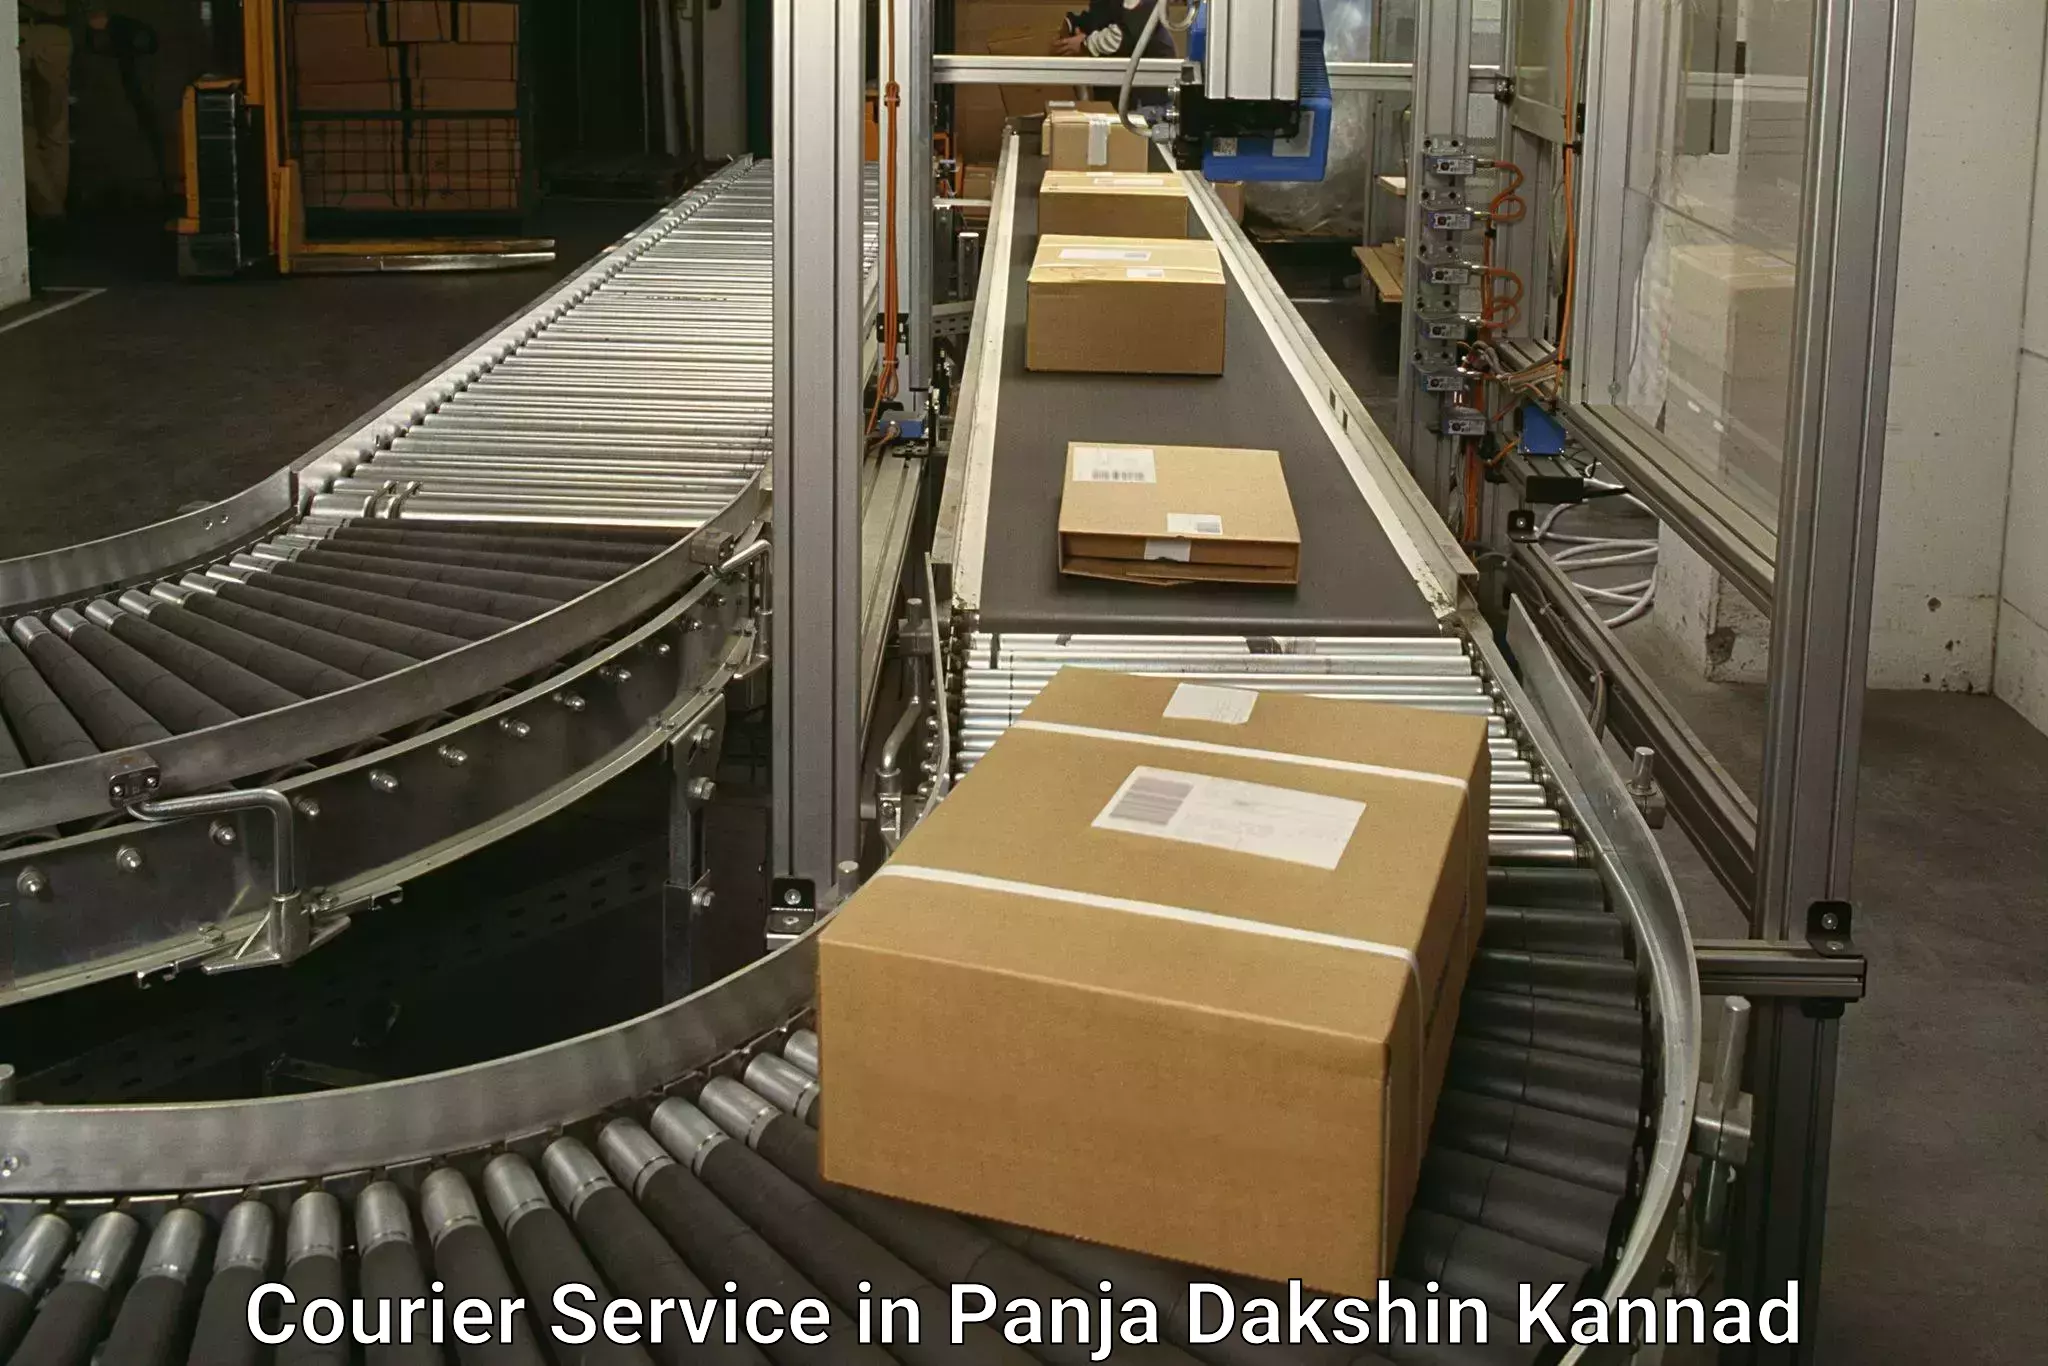 Speedy delivery service in Panja Dakshin Kannad